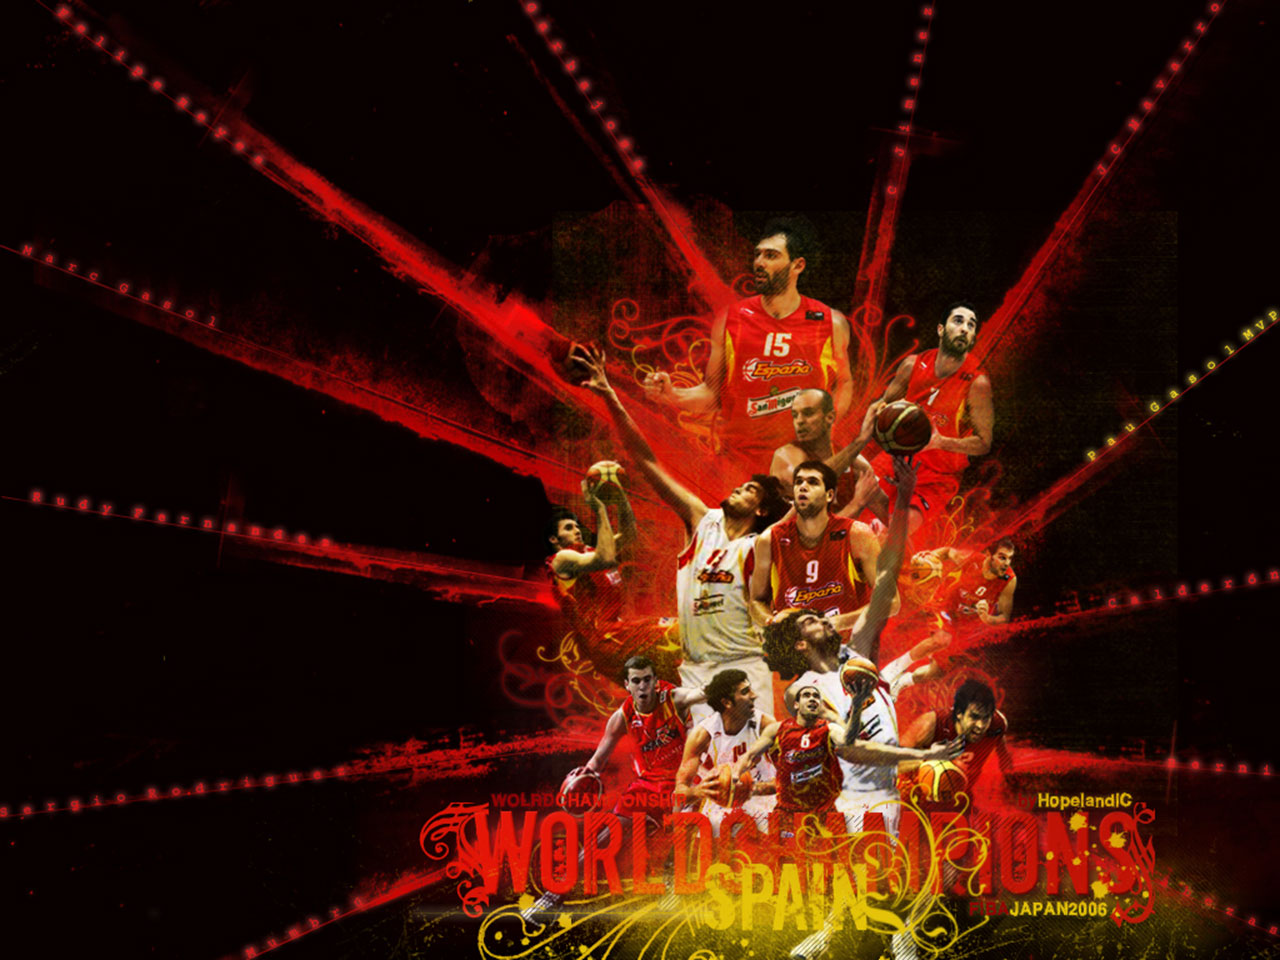 Spain 2006 World Champions Wallpaper | Basketball Wallpapers at BasketWallpapers.com